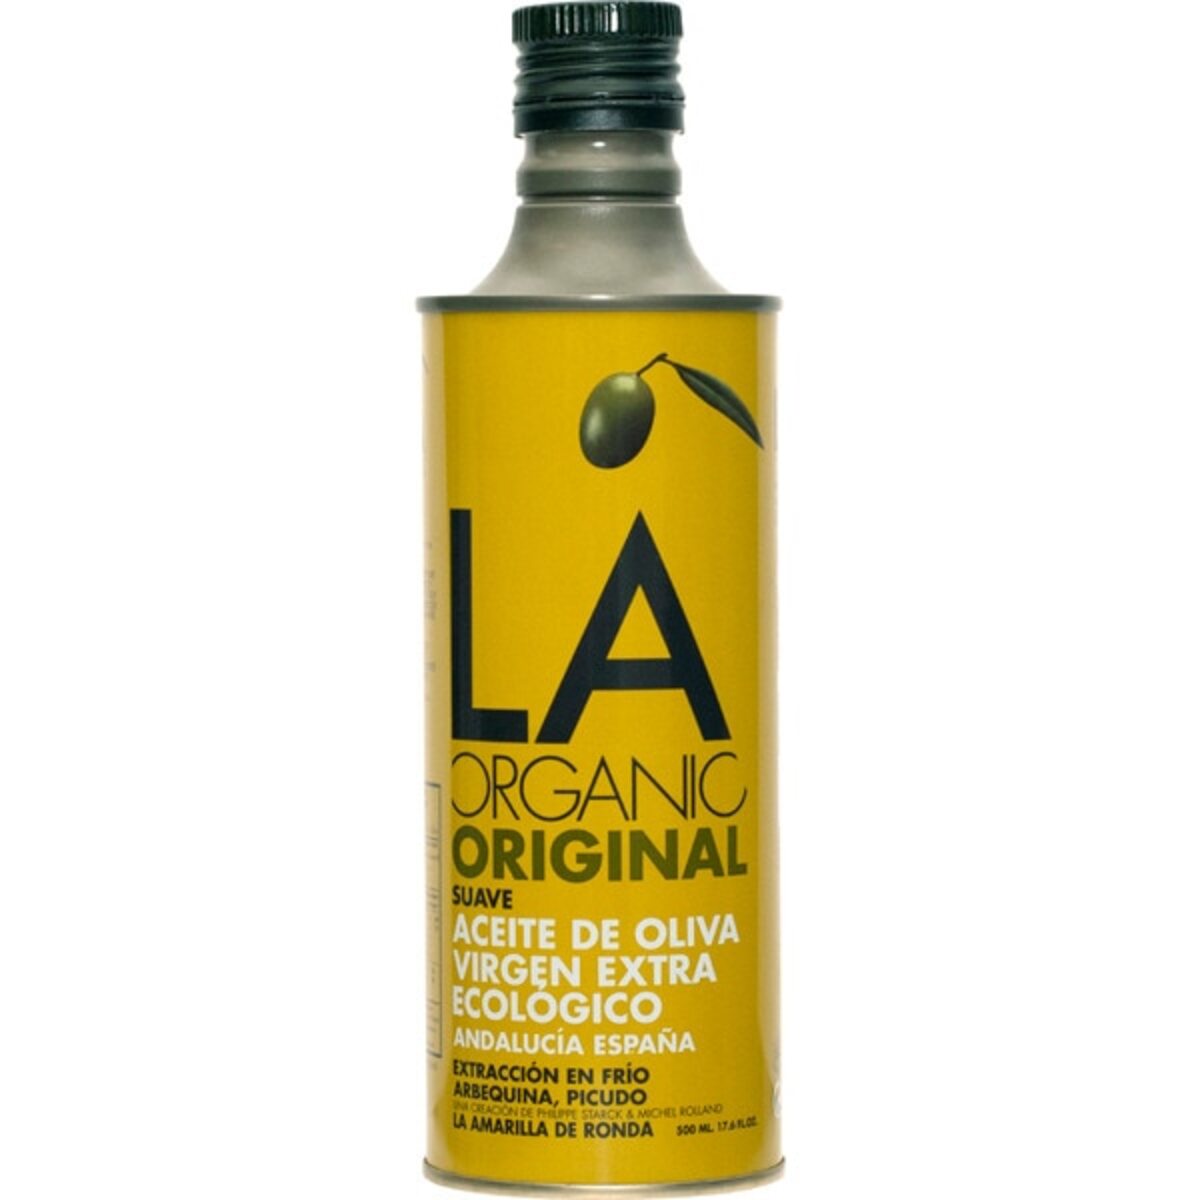 La Original,  mild virgin olive oil 500ml